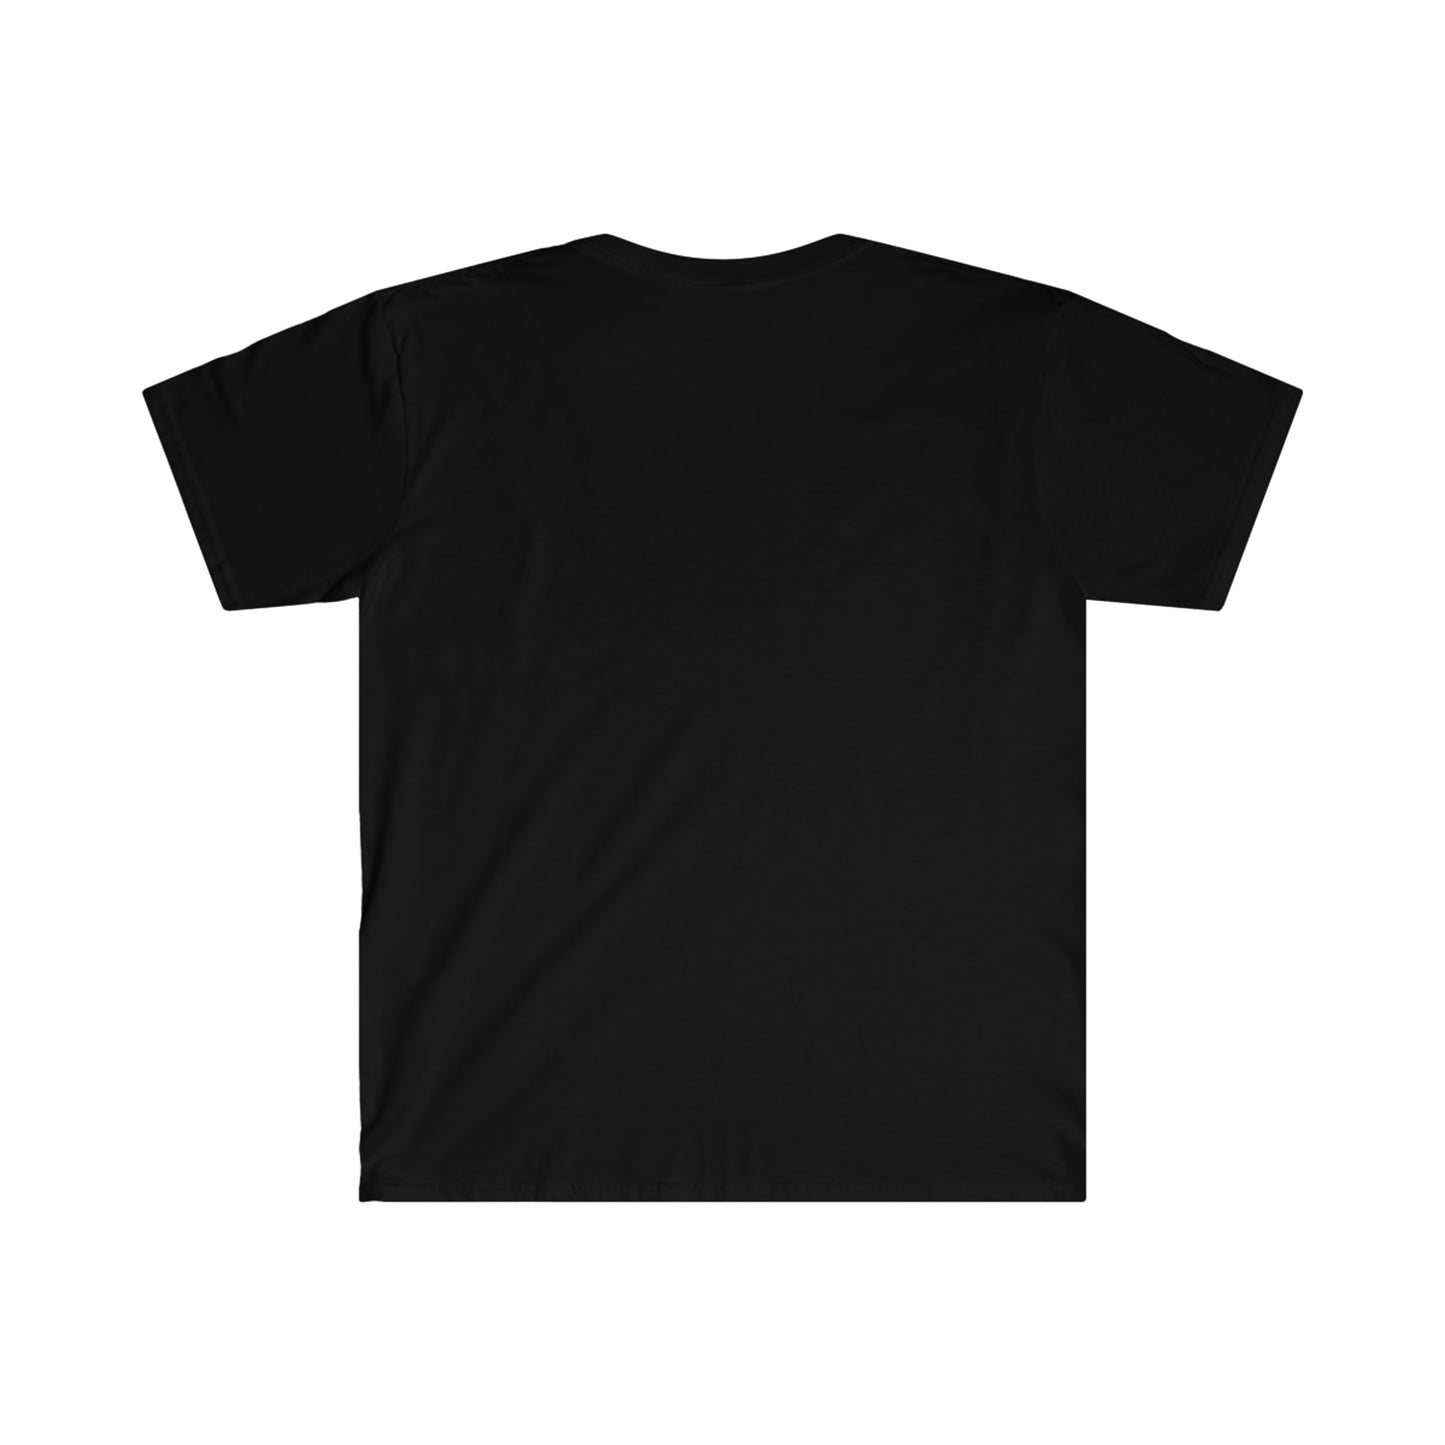 Temiskaming Shores - Men's Softstyle T-Shirt